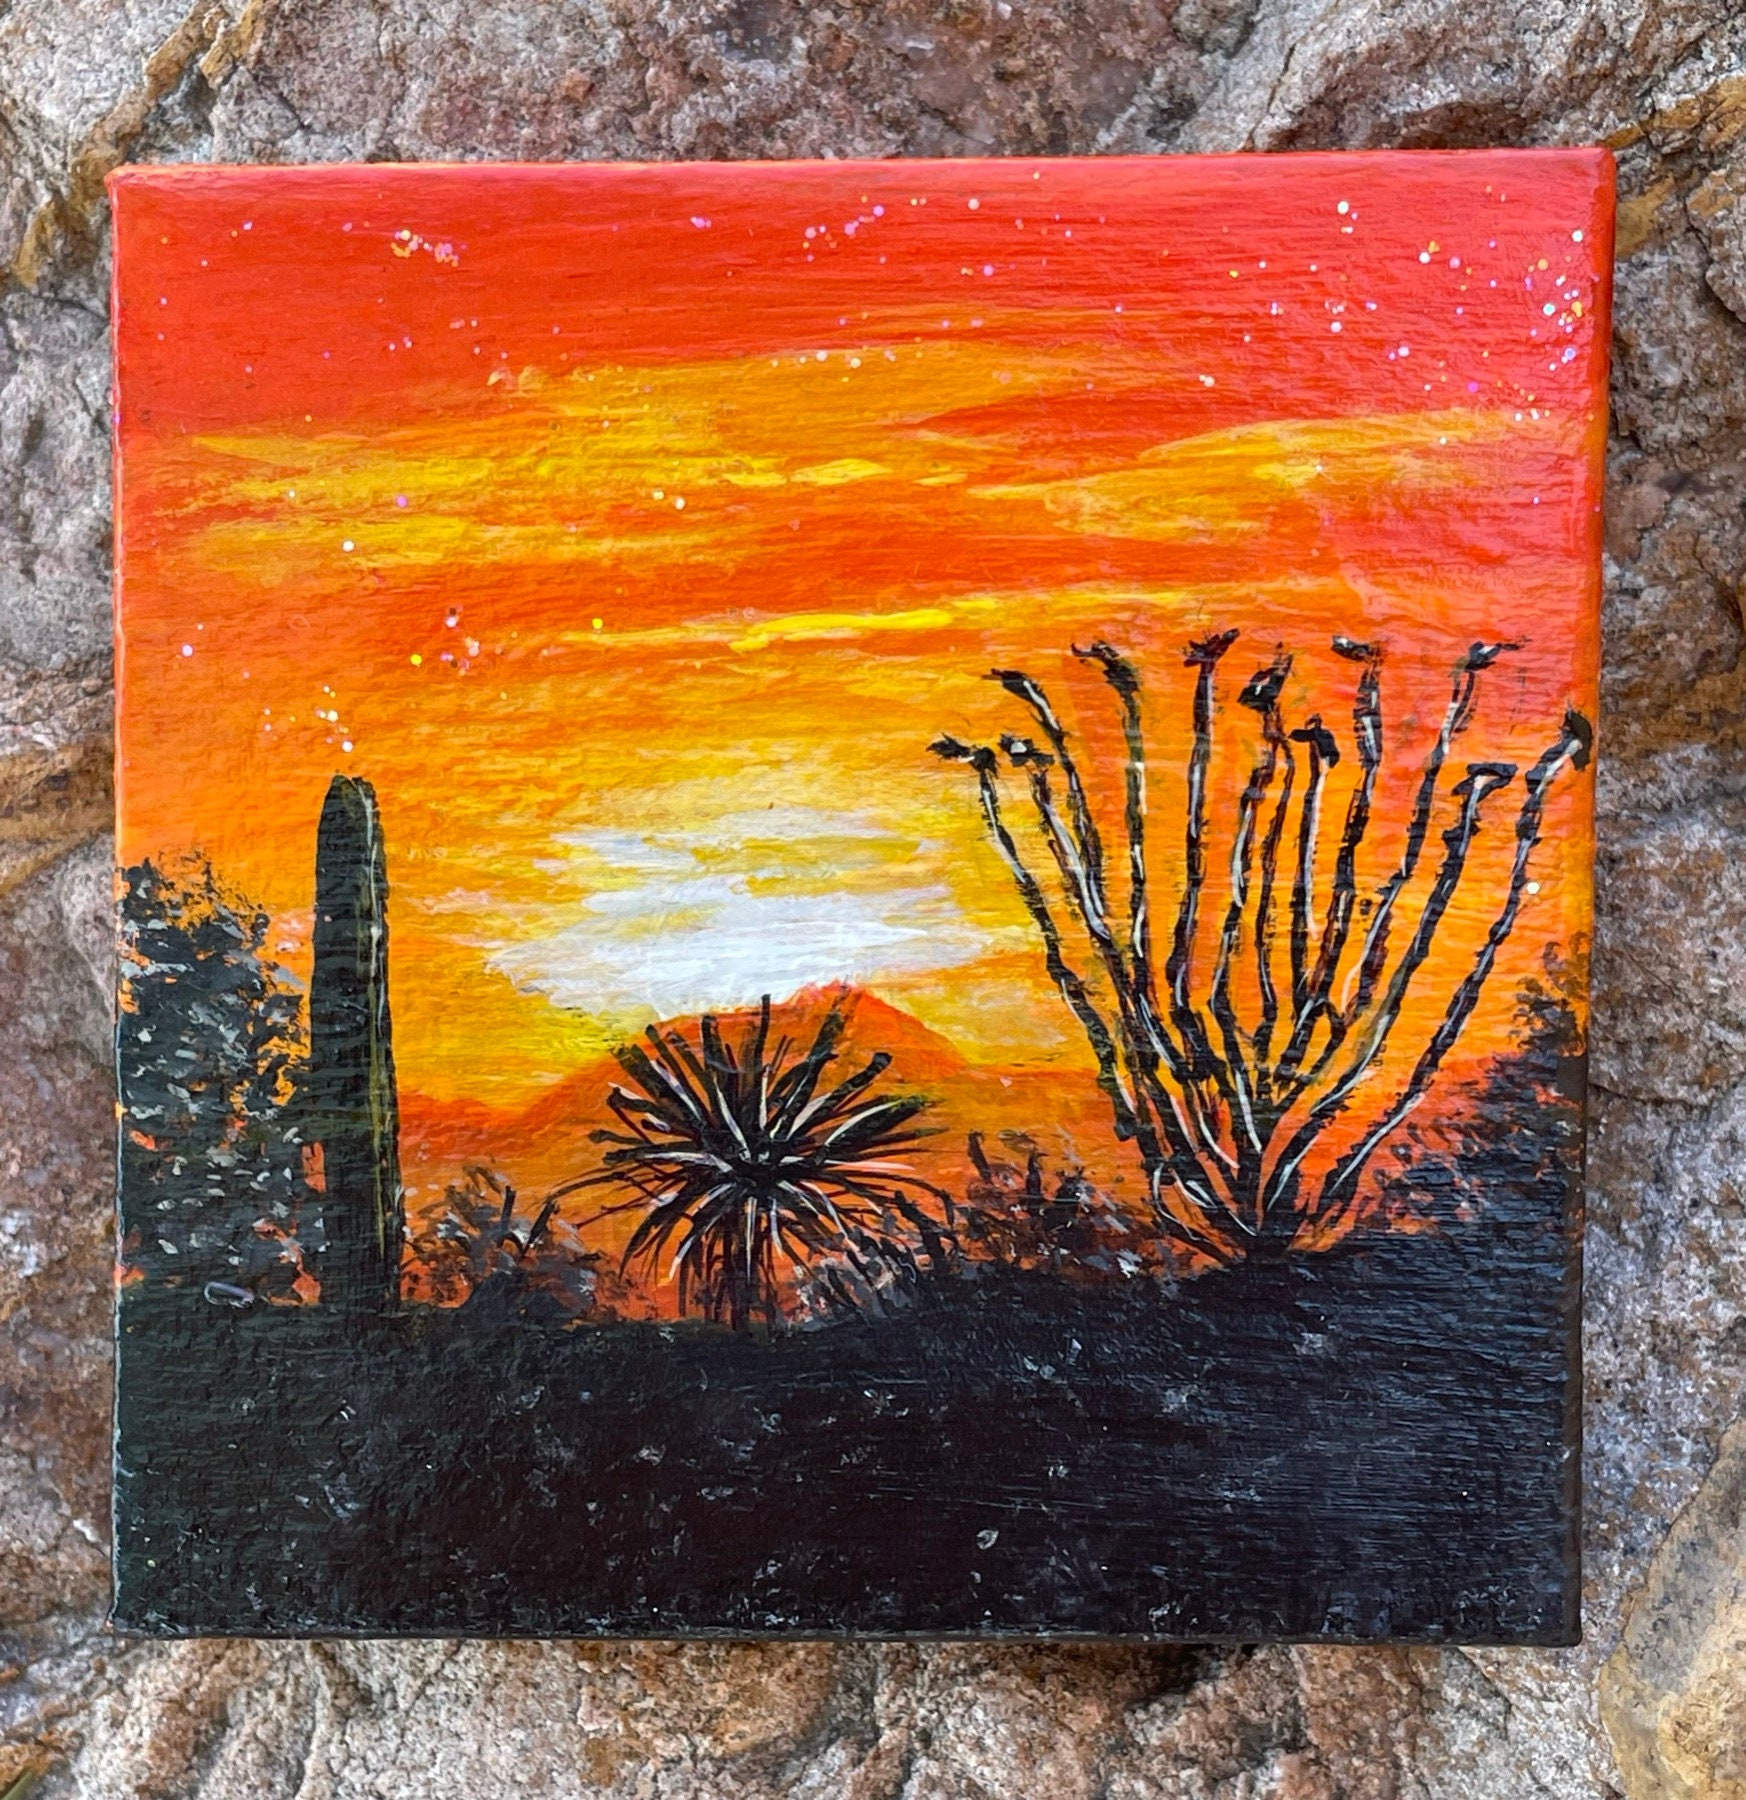 Sunset Mini Canvas Painting, Small Original Oil Painting, Oc - Inspire  Uplift